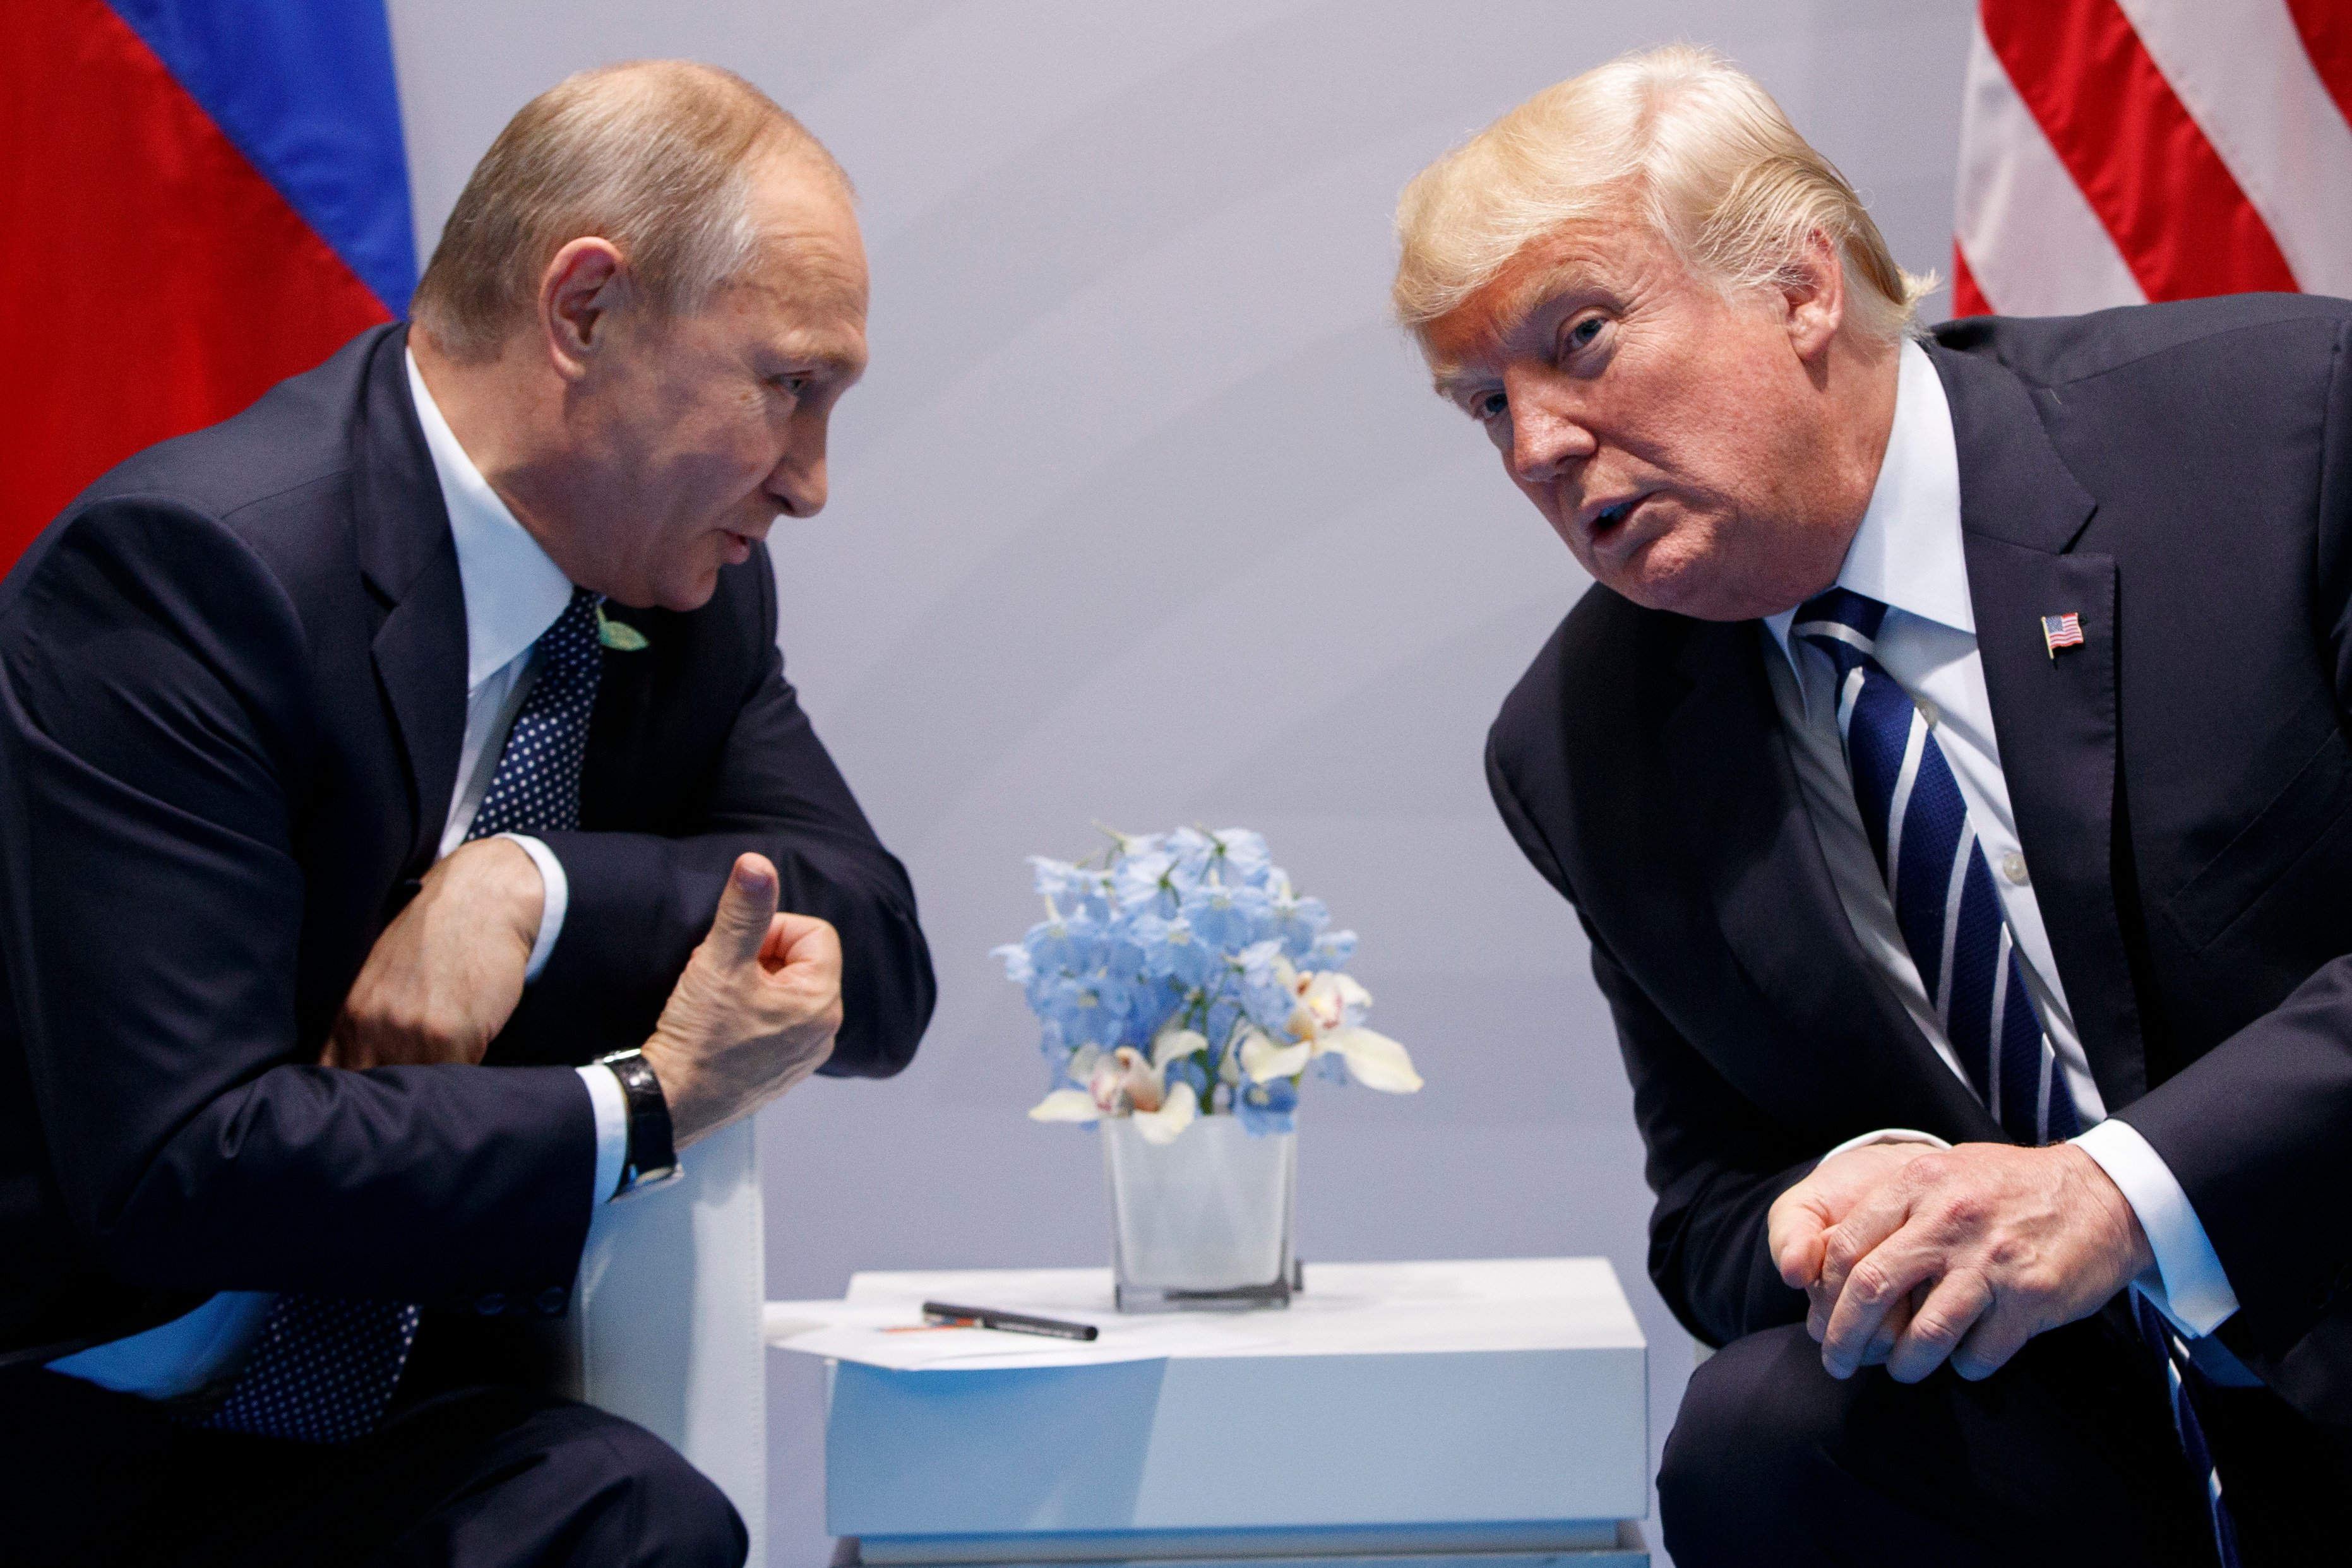 US President Donald Trump meets Russian President Vladimir Putin at the G20 Summit in Hamburg, Germany, in July 2017. Photo: AP